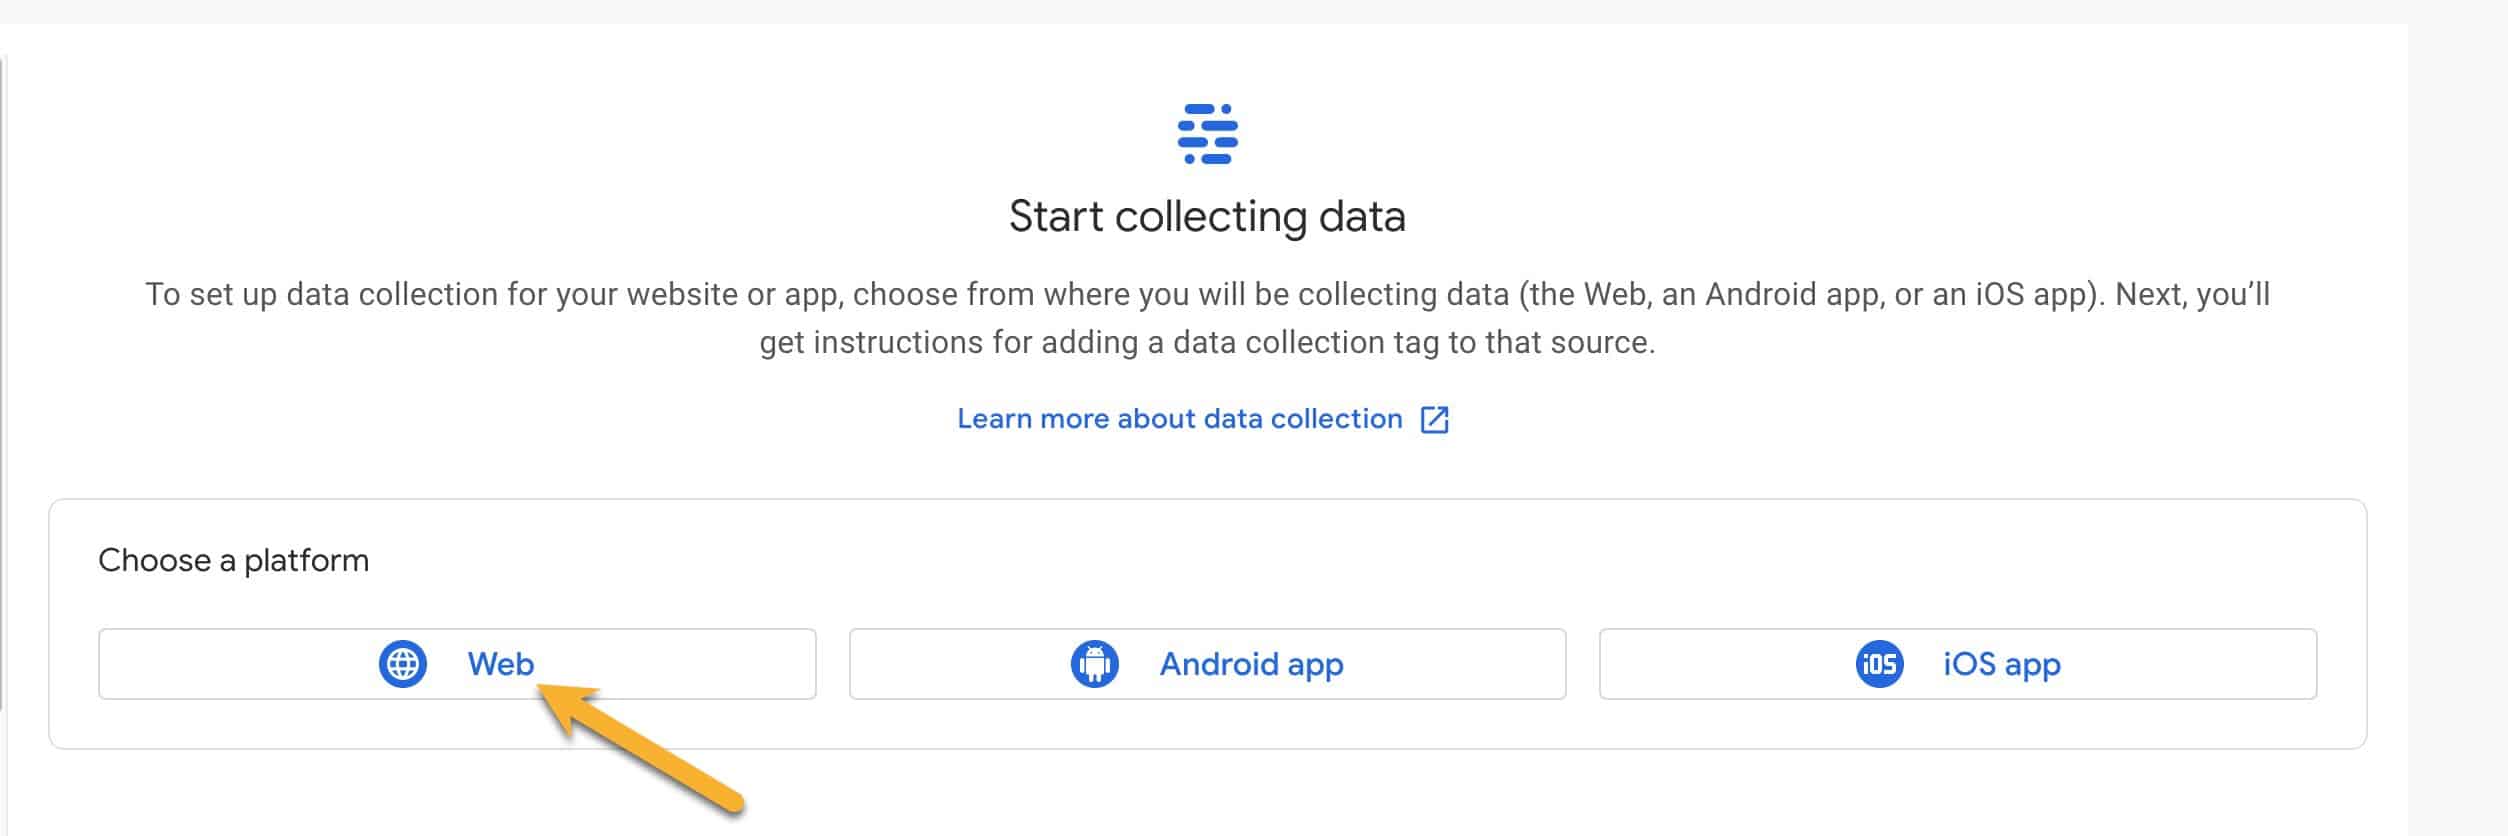 Screenshot showing the Platform selection, choosing Web.